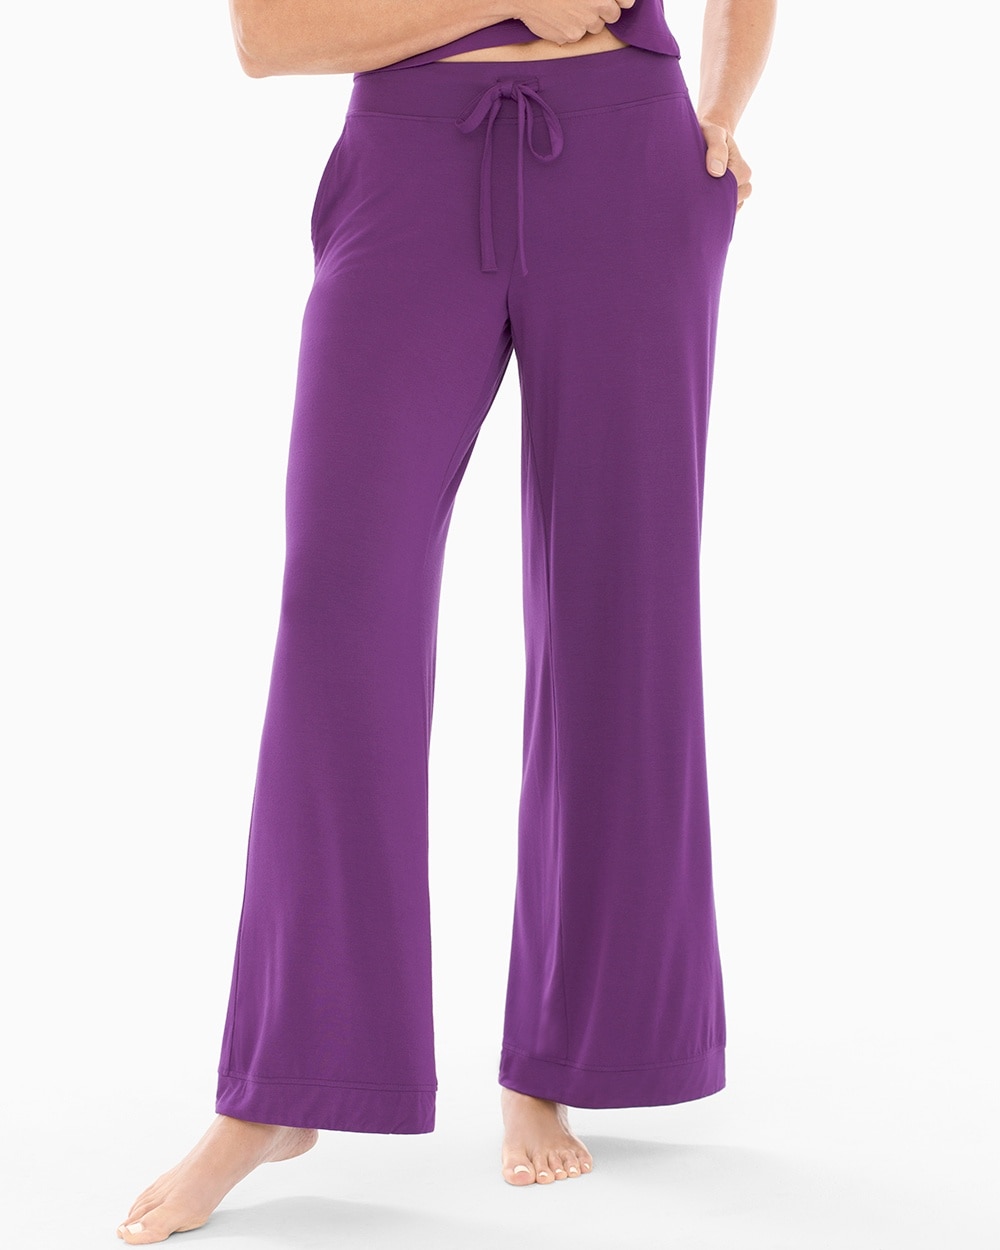 Cool Nights Pajama Pants Imperial Purple